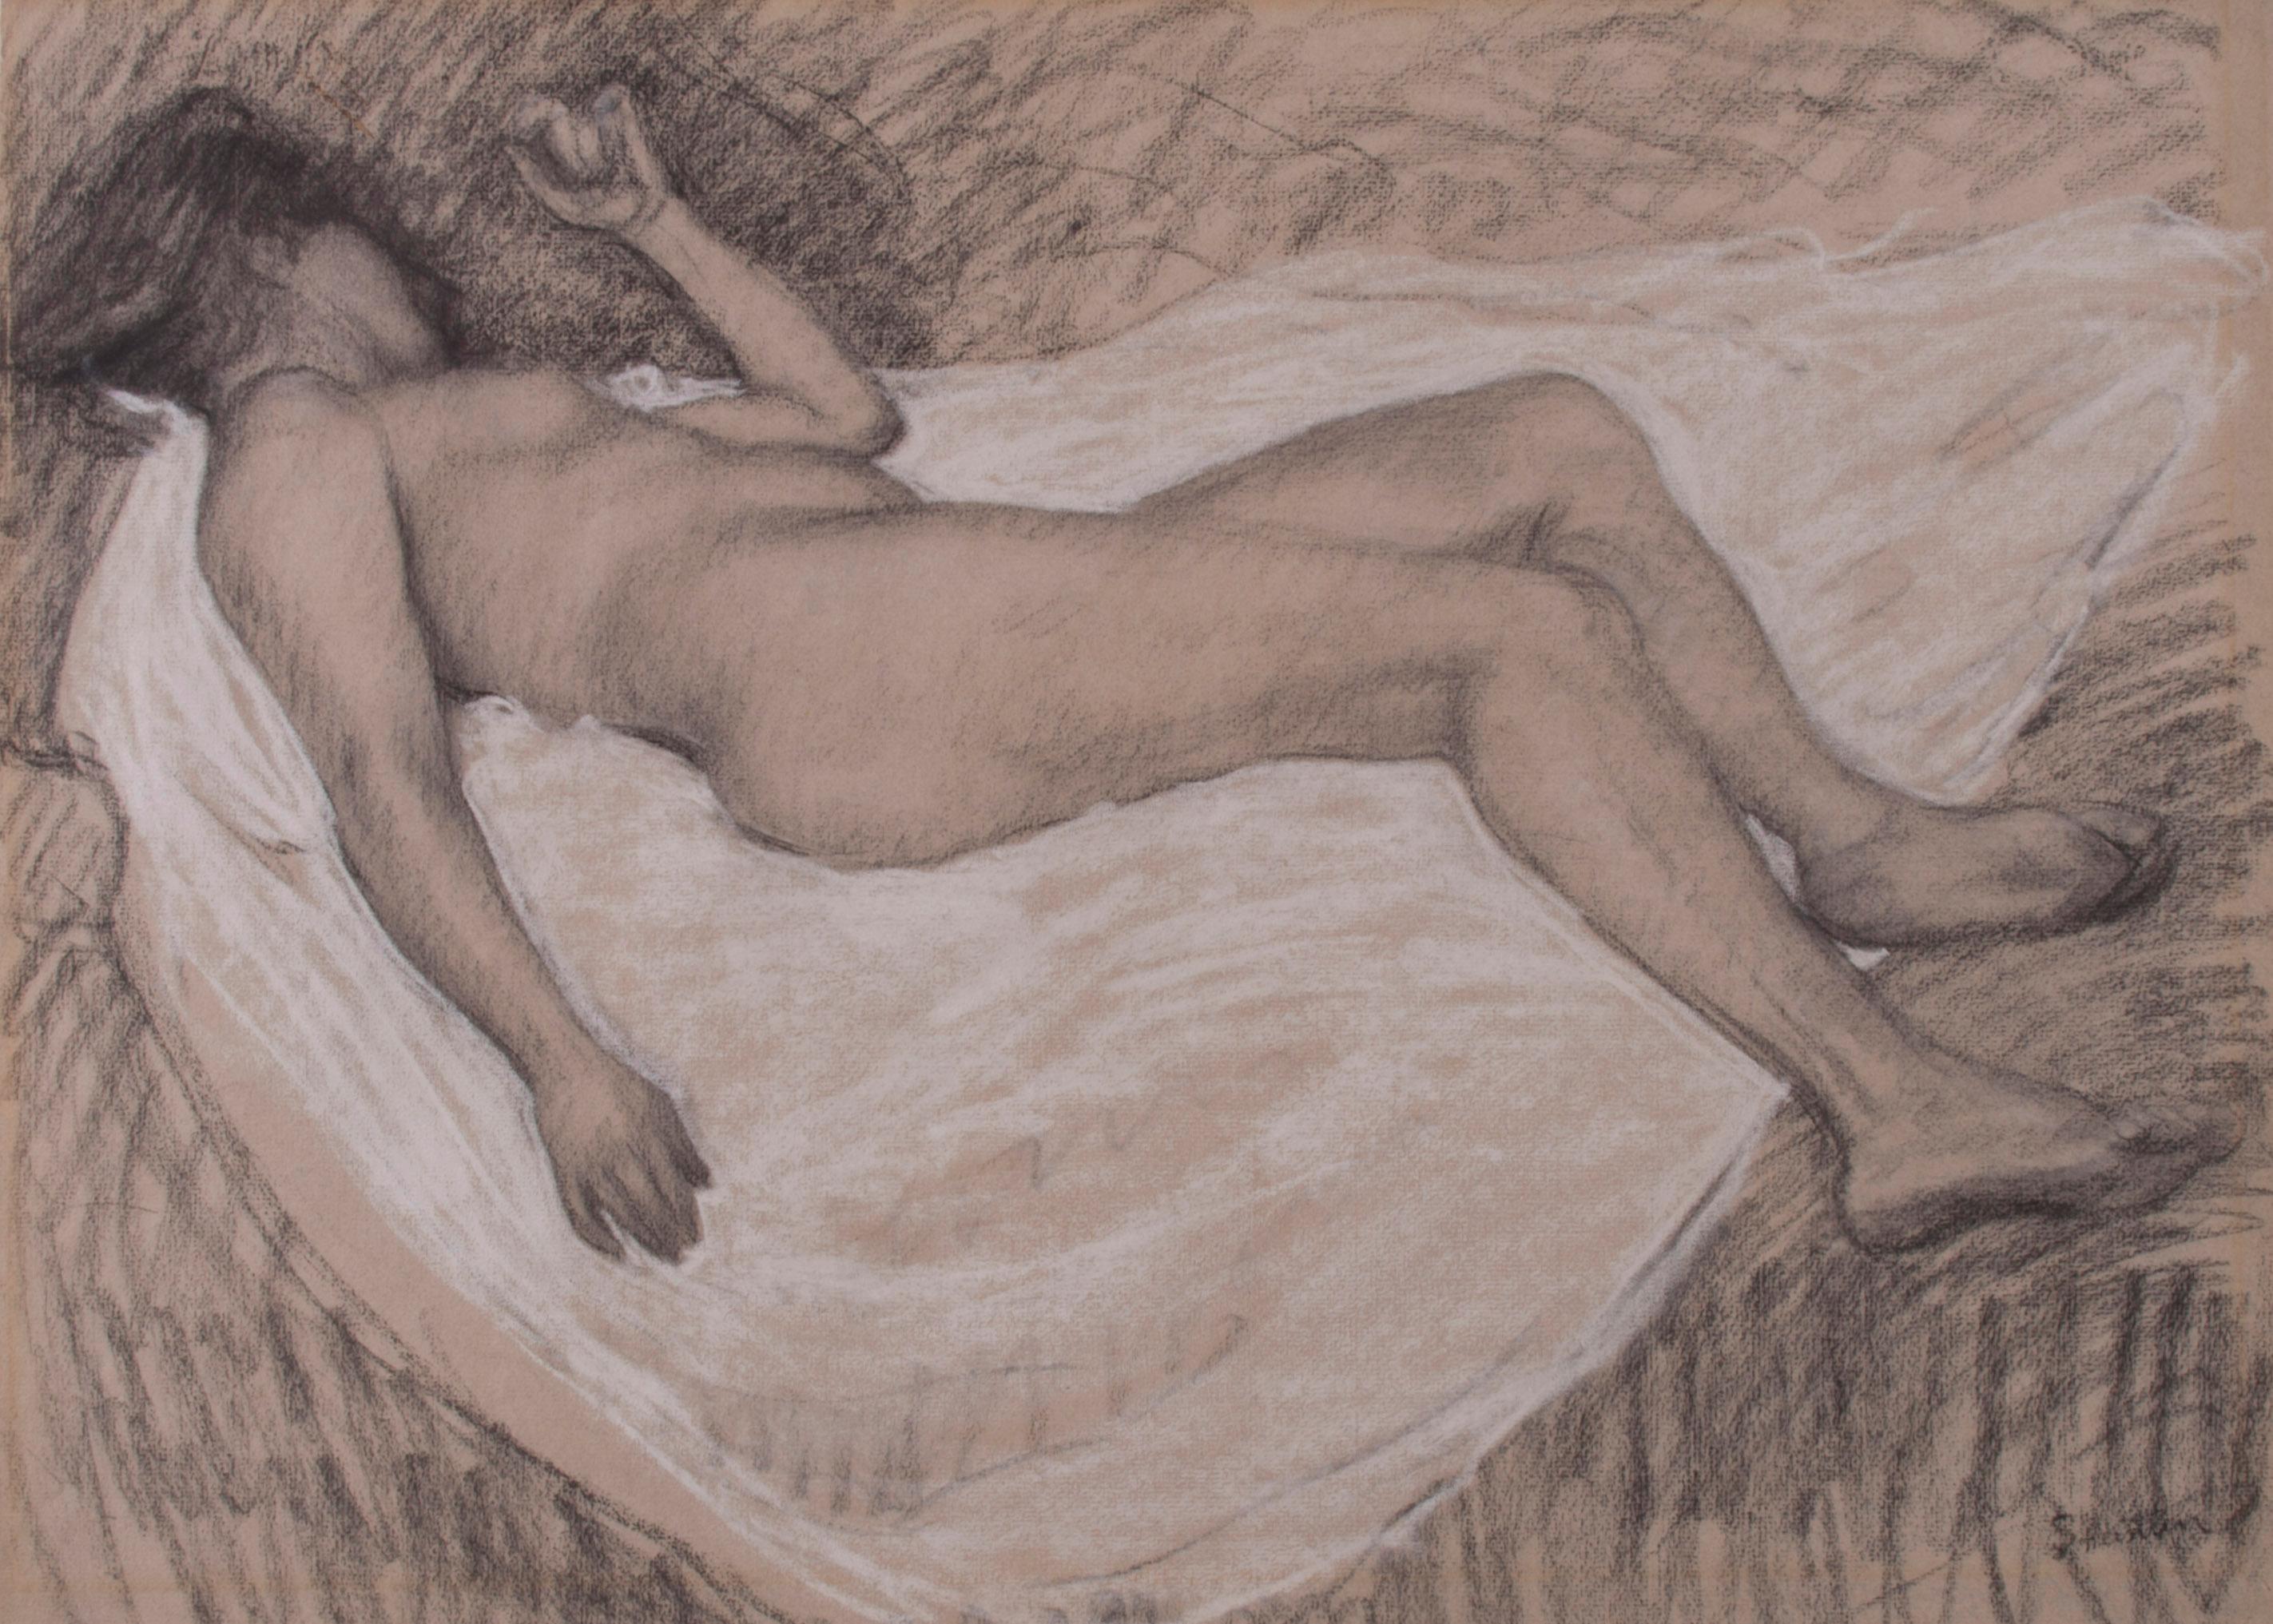 Femme nue de dos allongee